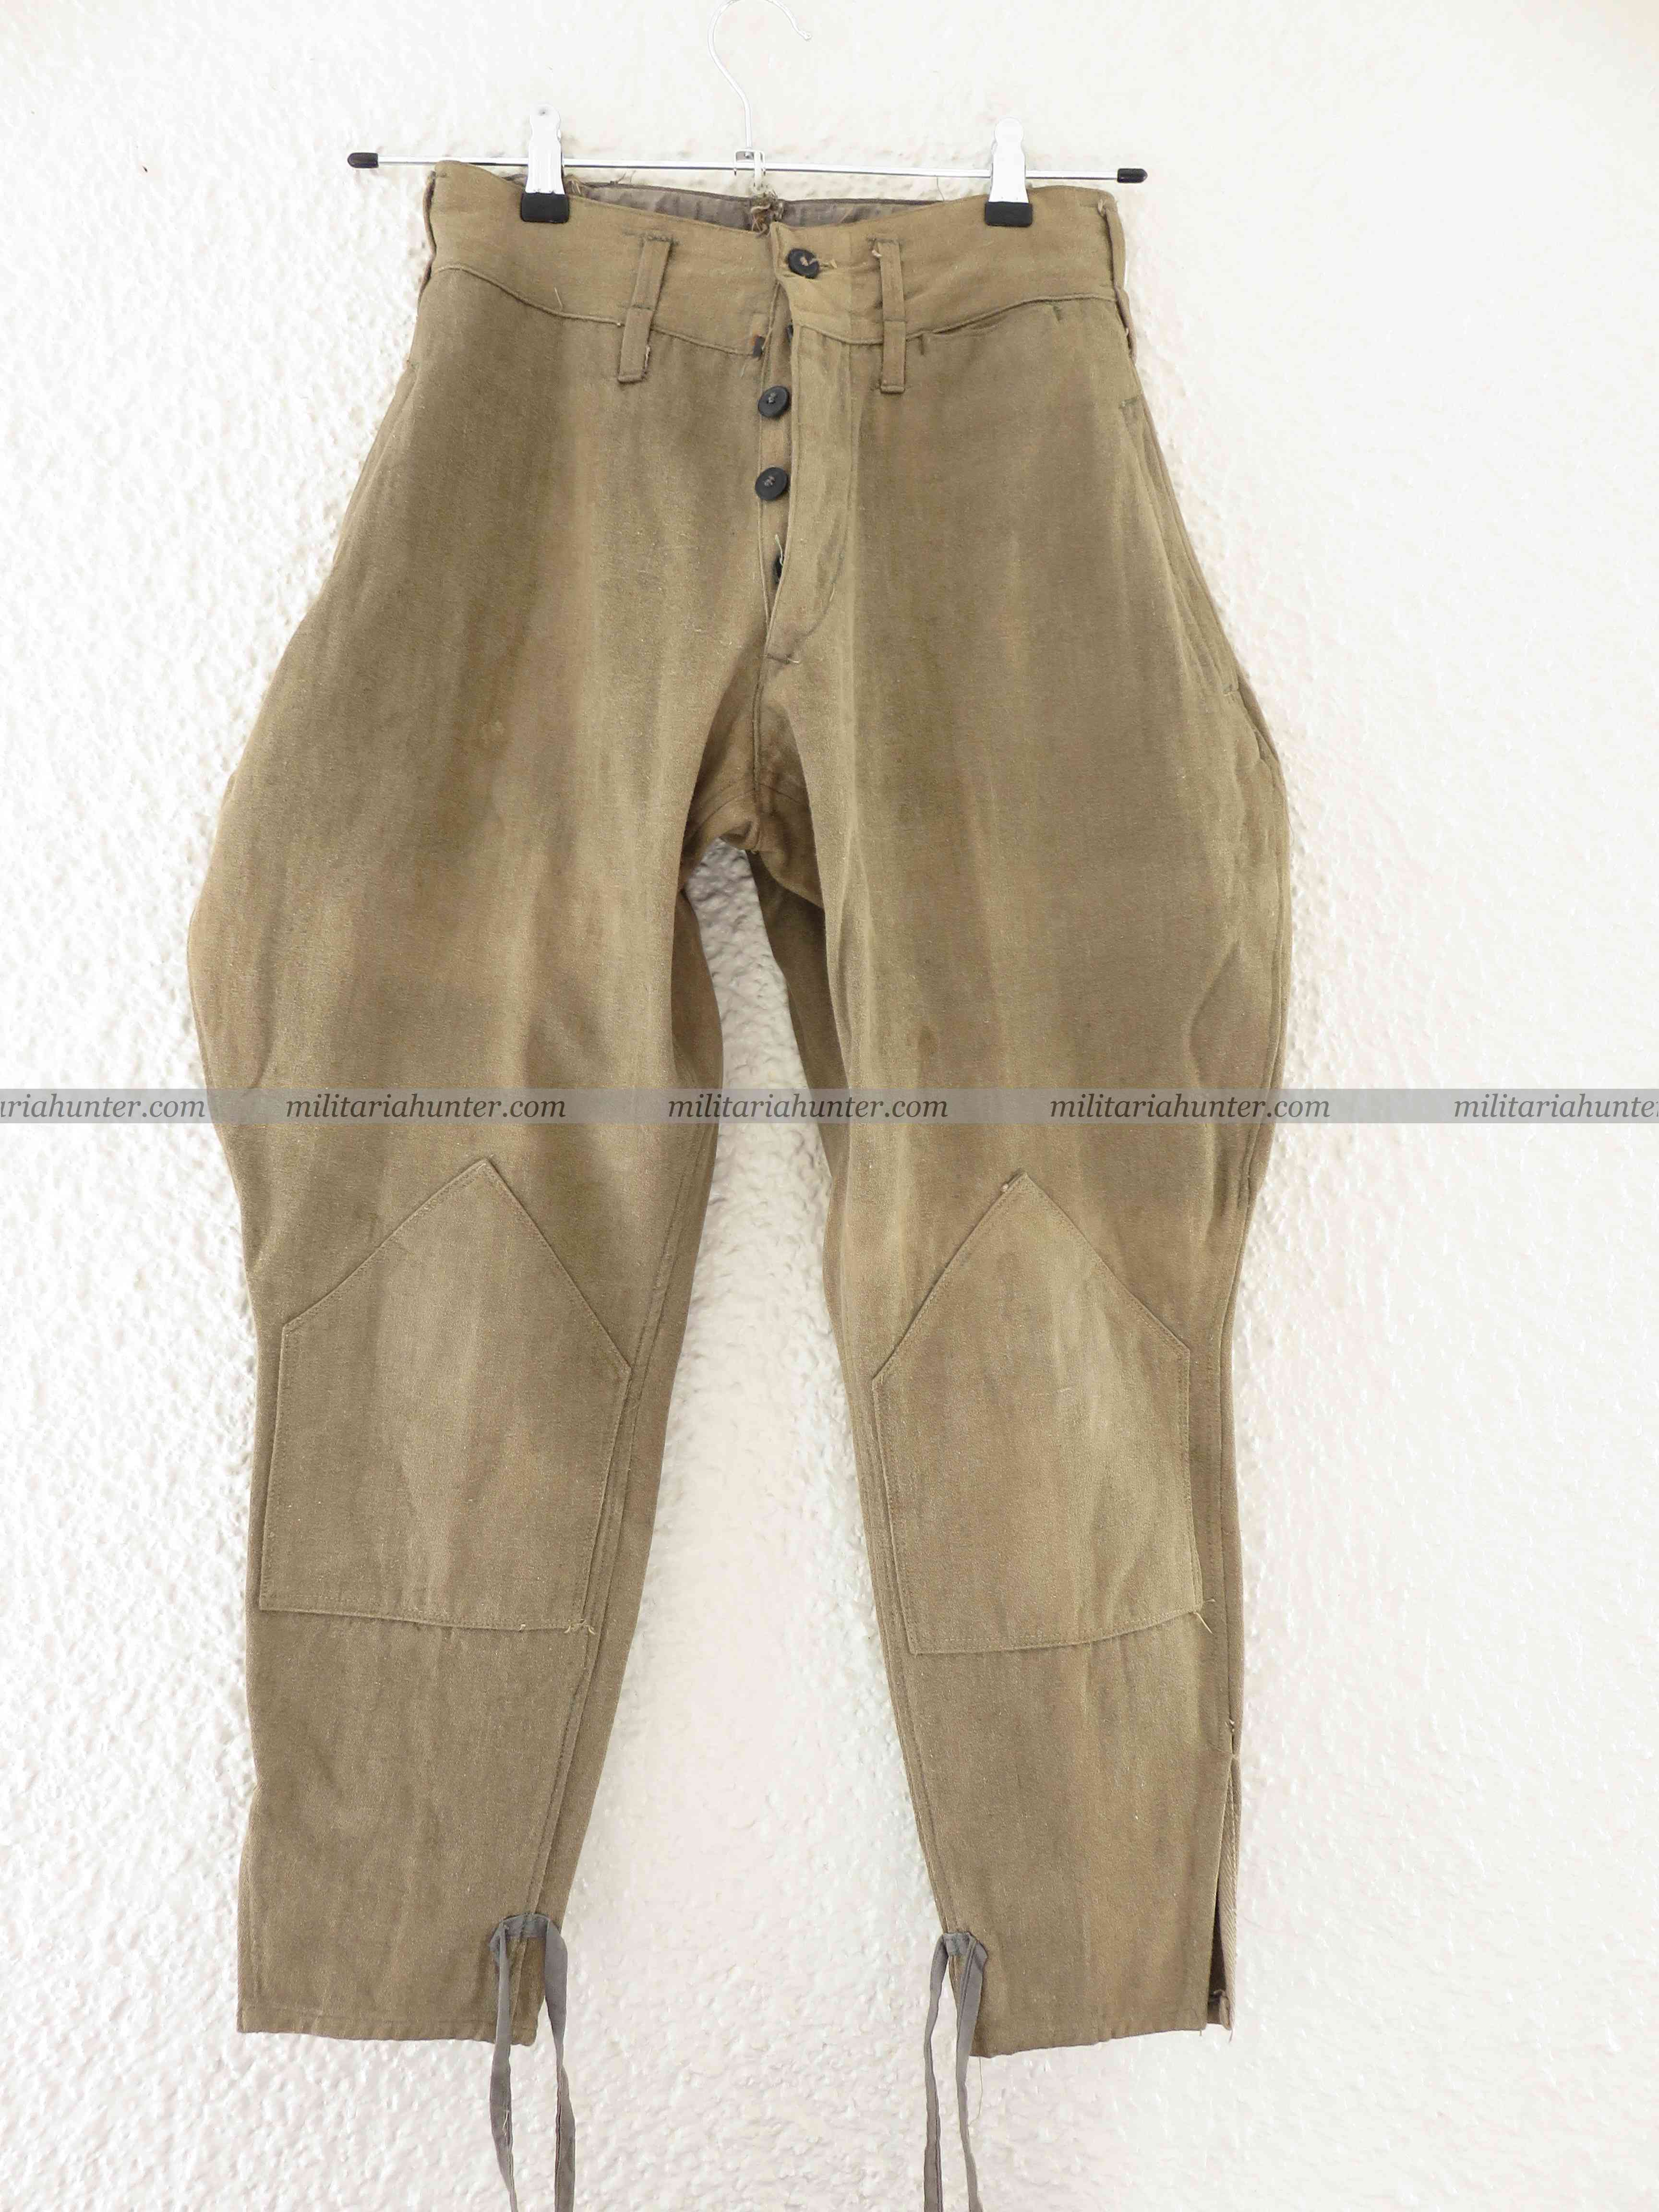 militaria : WW2 scarce russian M35 trousers breeches dated 1940 - pantalon russe M35